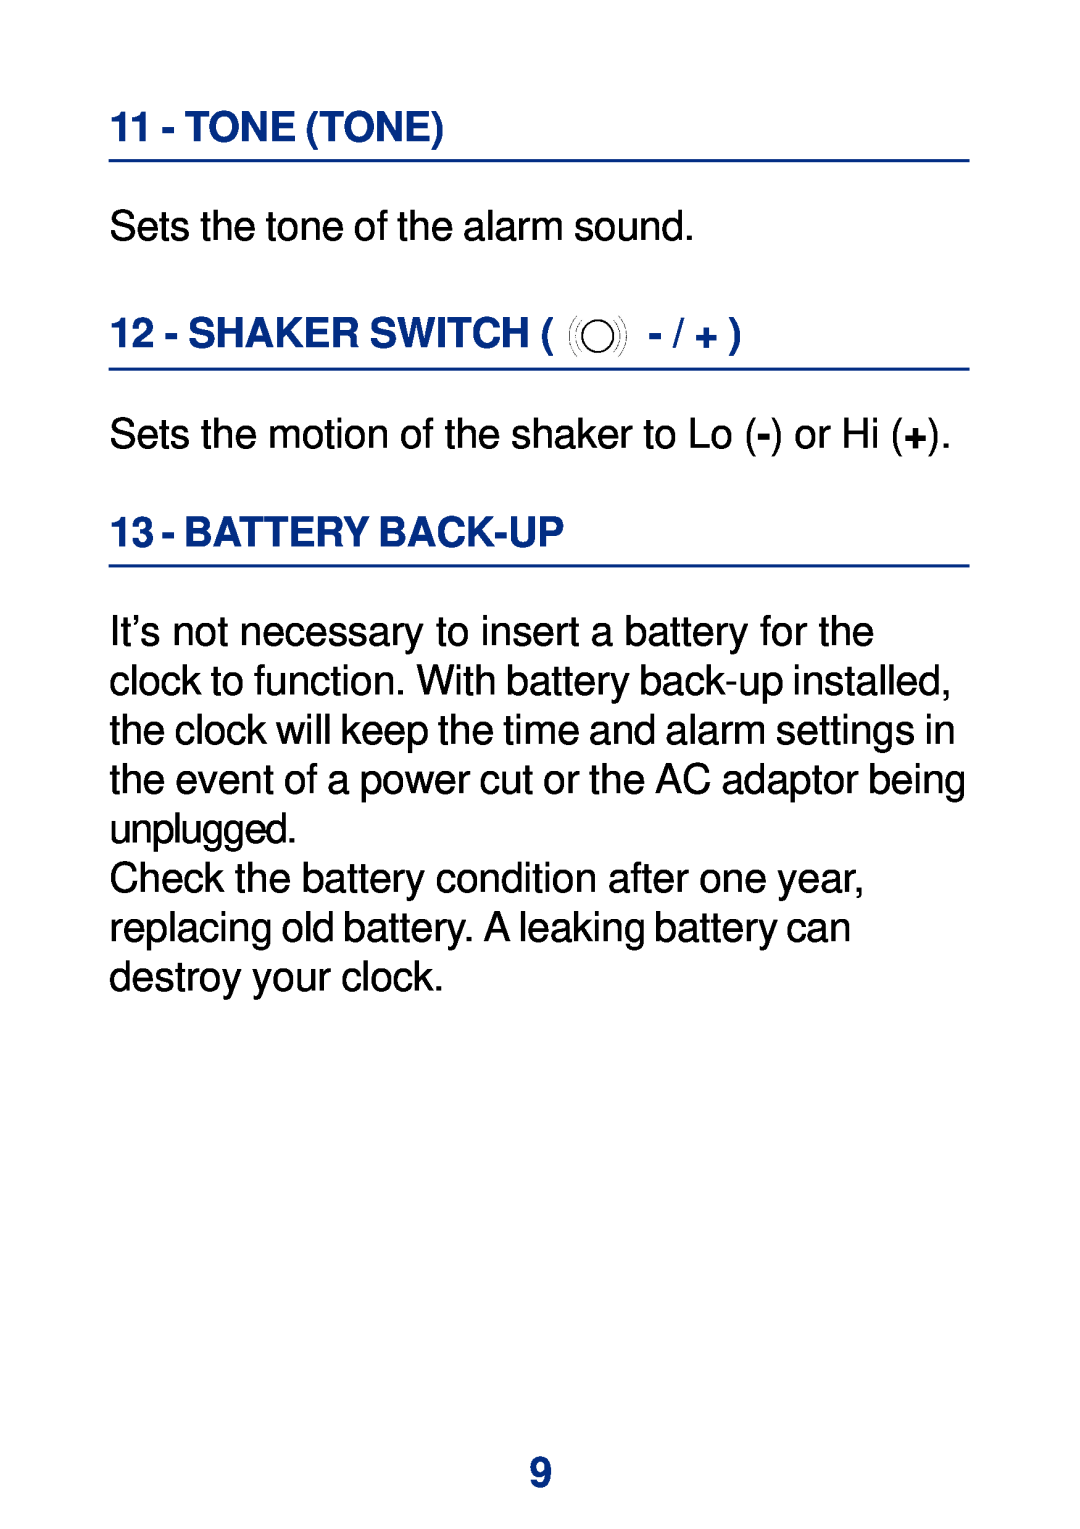 Geemarc Large Display Alarm Clock manual Tone Tone, Shaker Switch - / +, Battery Back-Up 